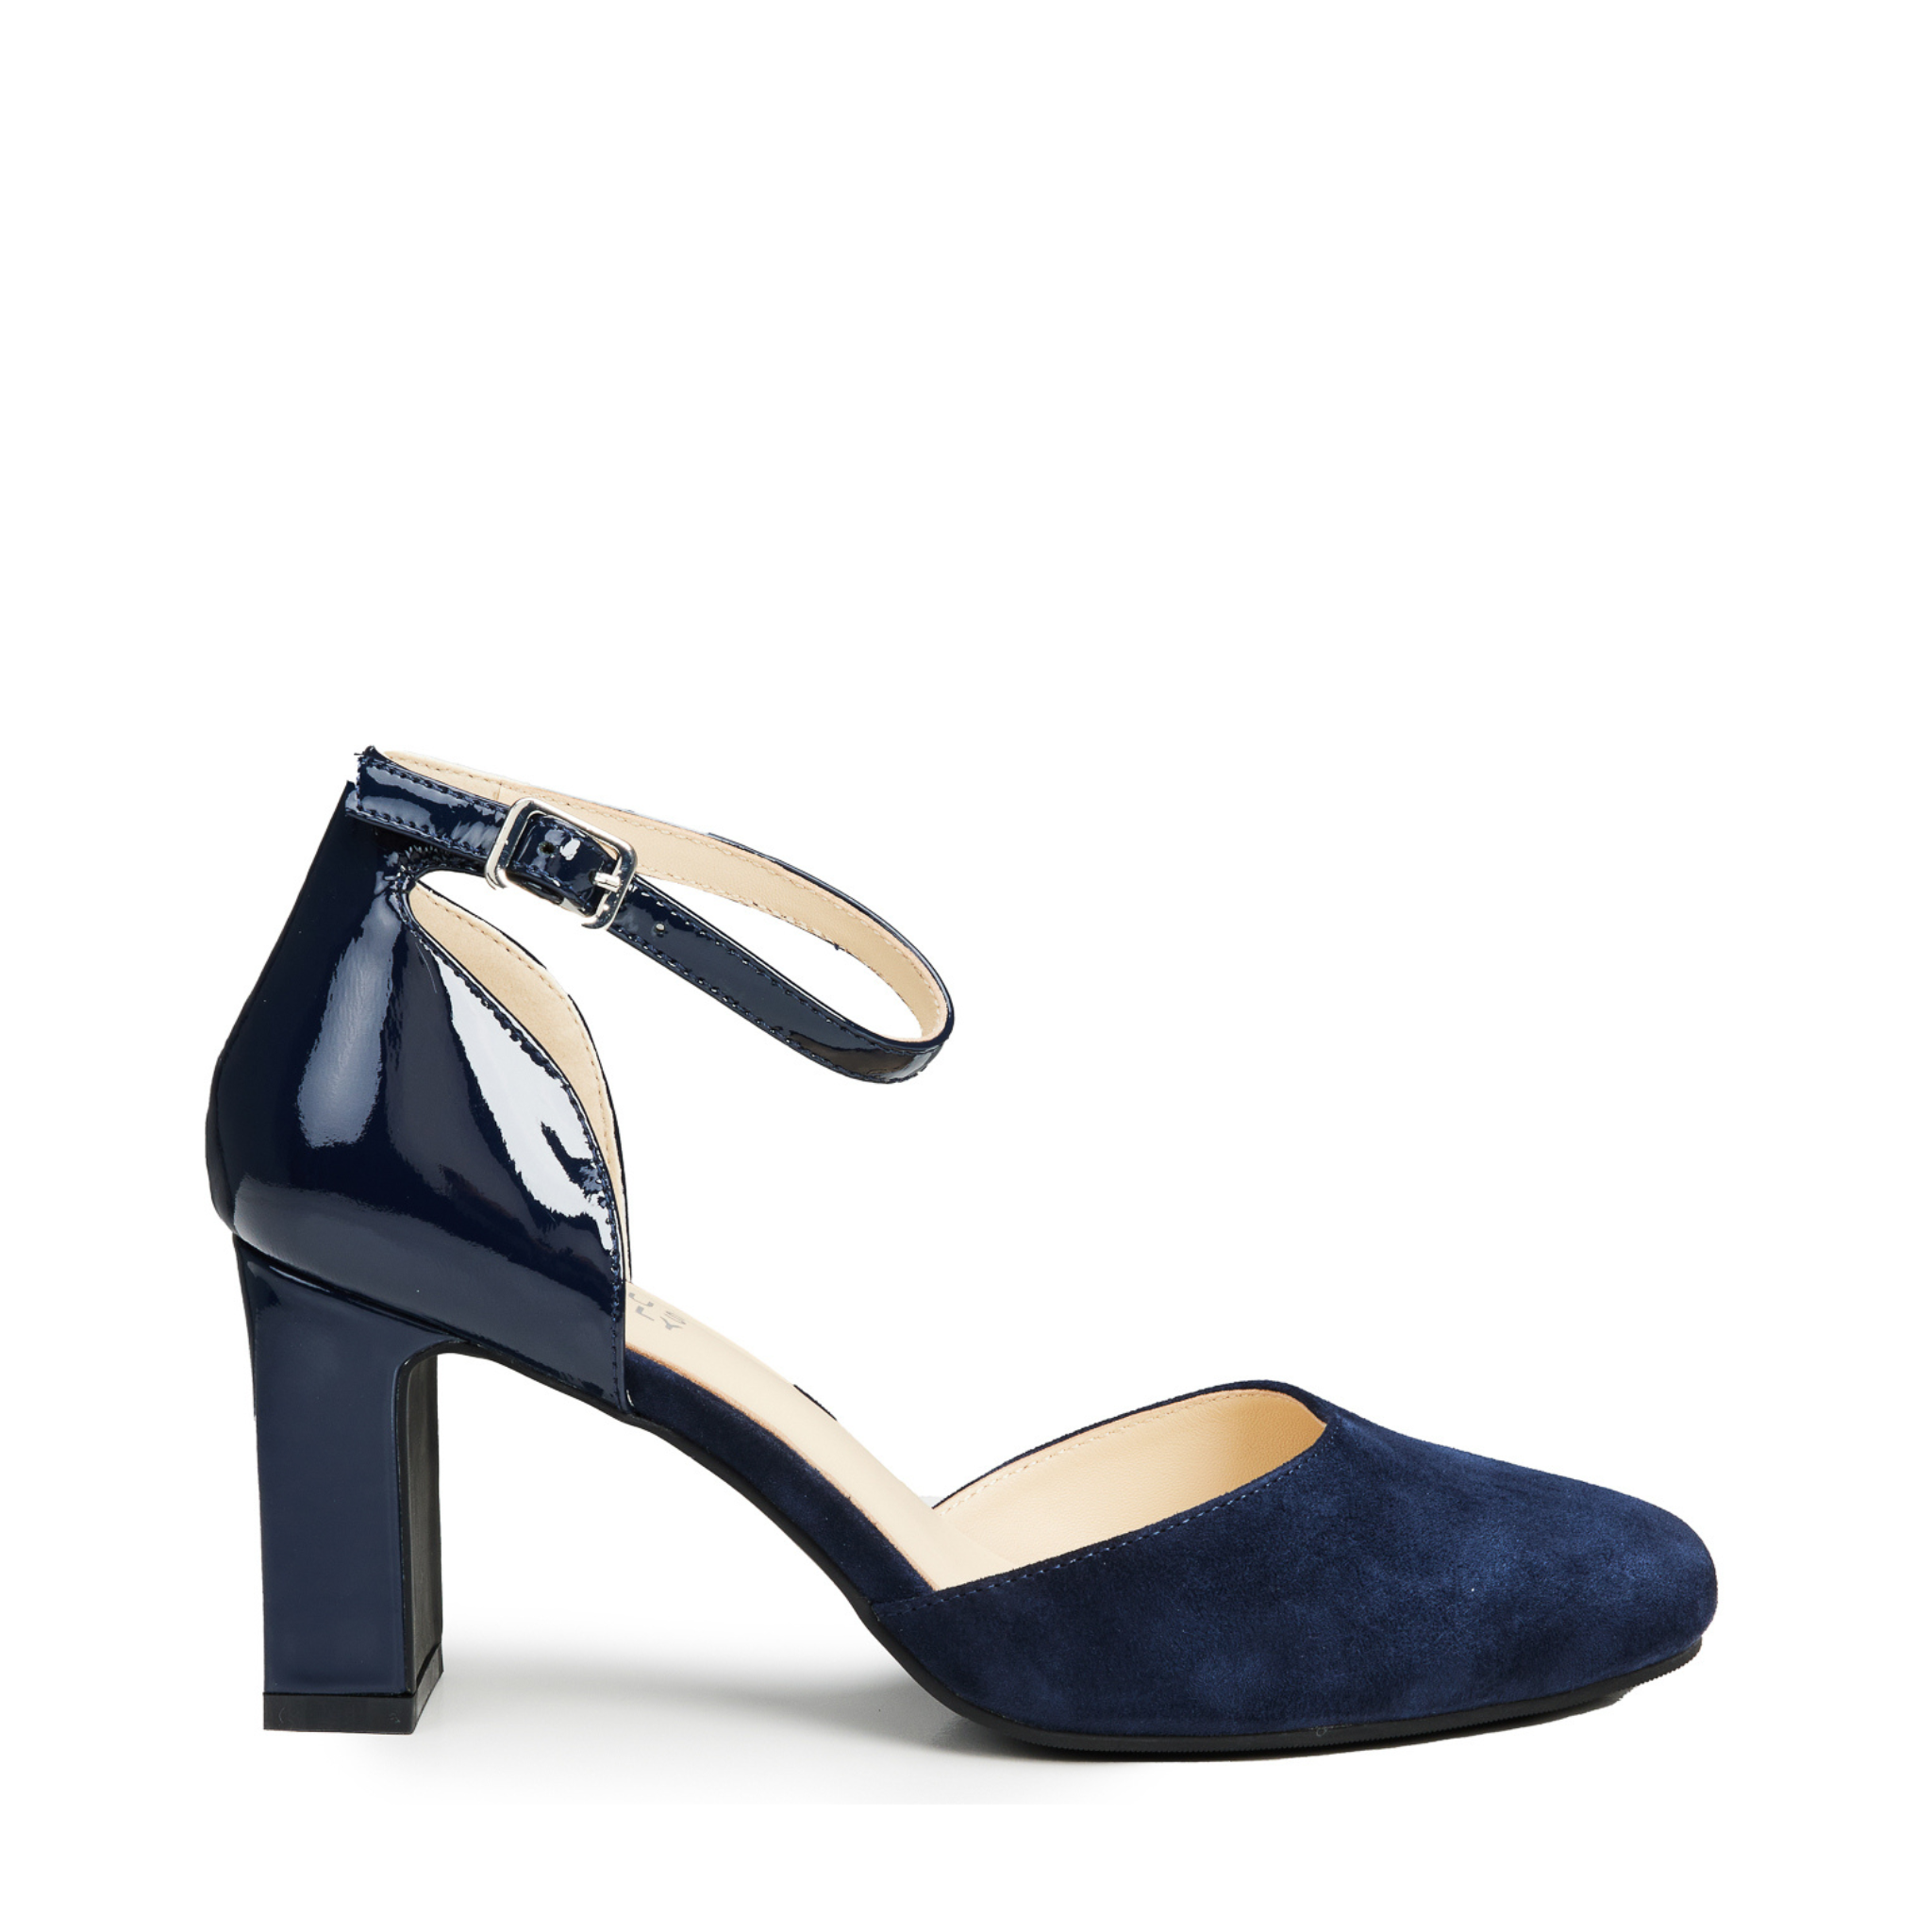 Ravella Heels | Buy Ravella Heels Online Australia | Shoe HQ